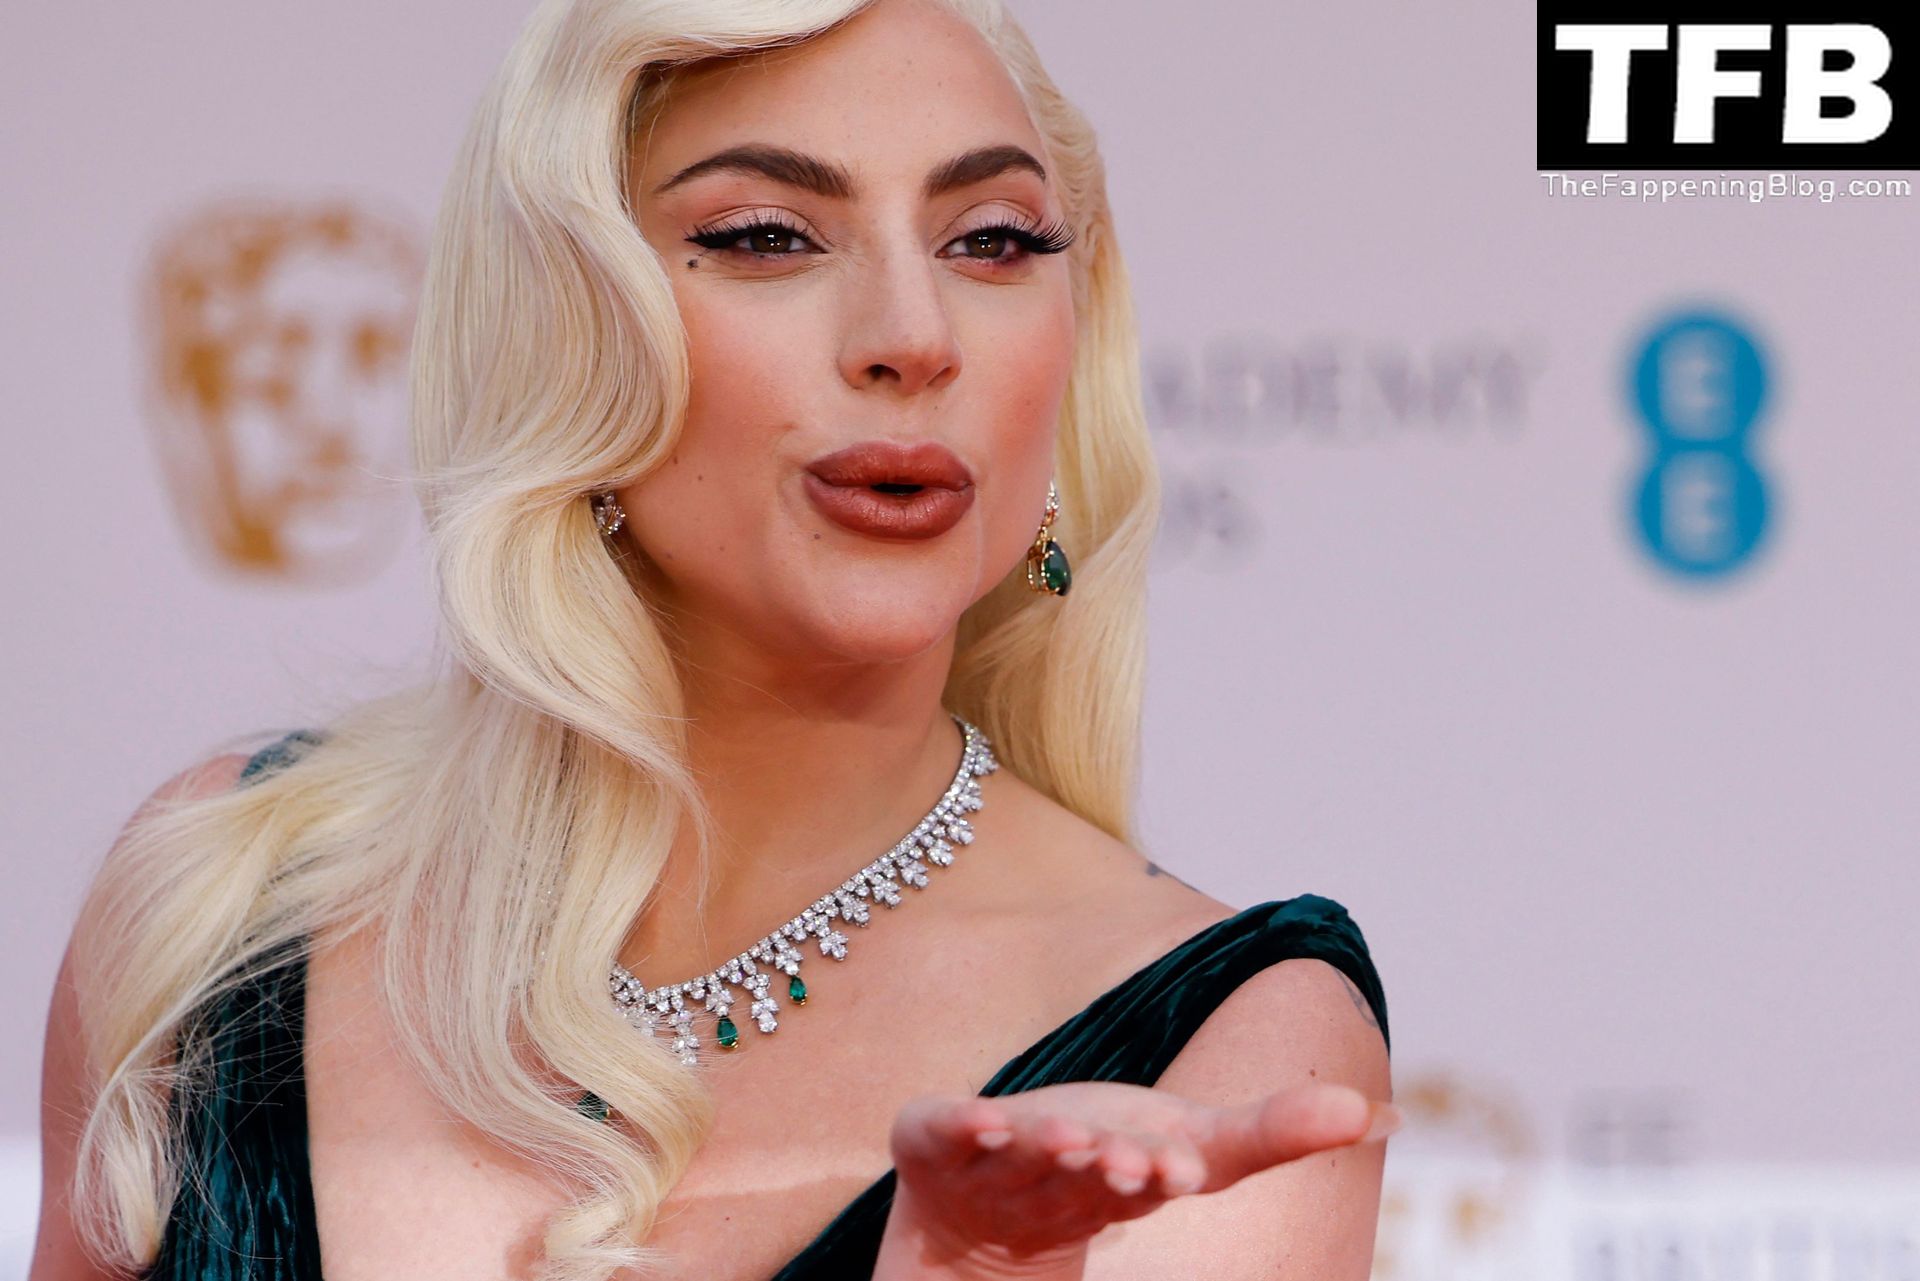 Lady-Gaga-Sexy-The-Fappening-Blog-30.jpg